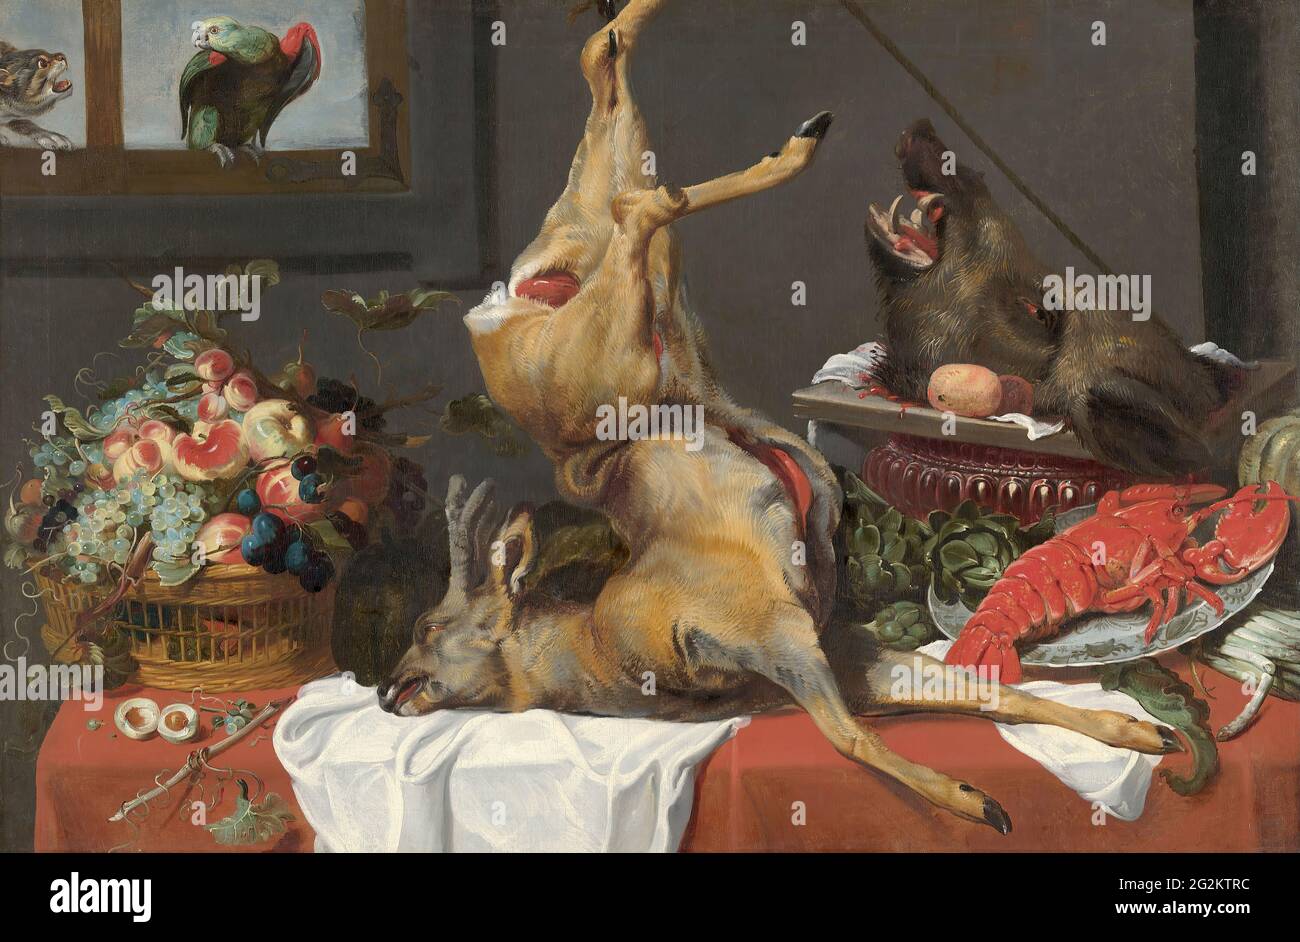 Født Bygge videre på hobby Frans Snyders - Still Life with a Dead Stag Stock Photo - Alamy